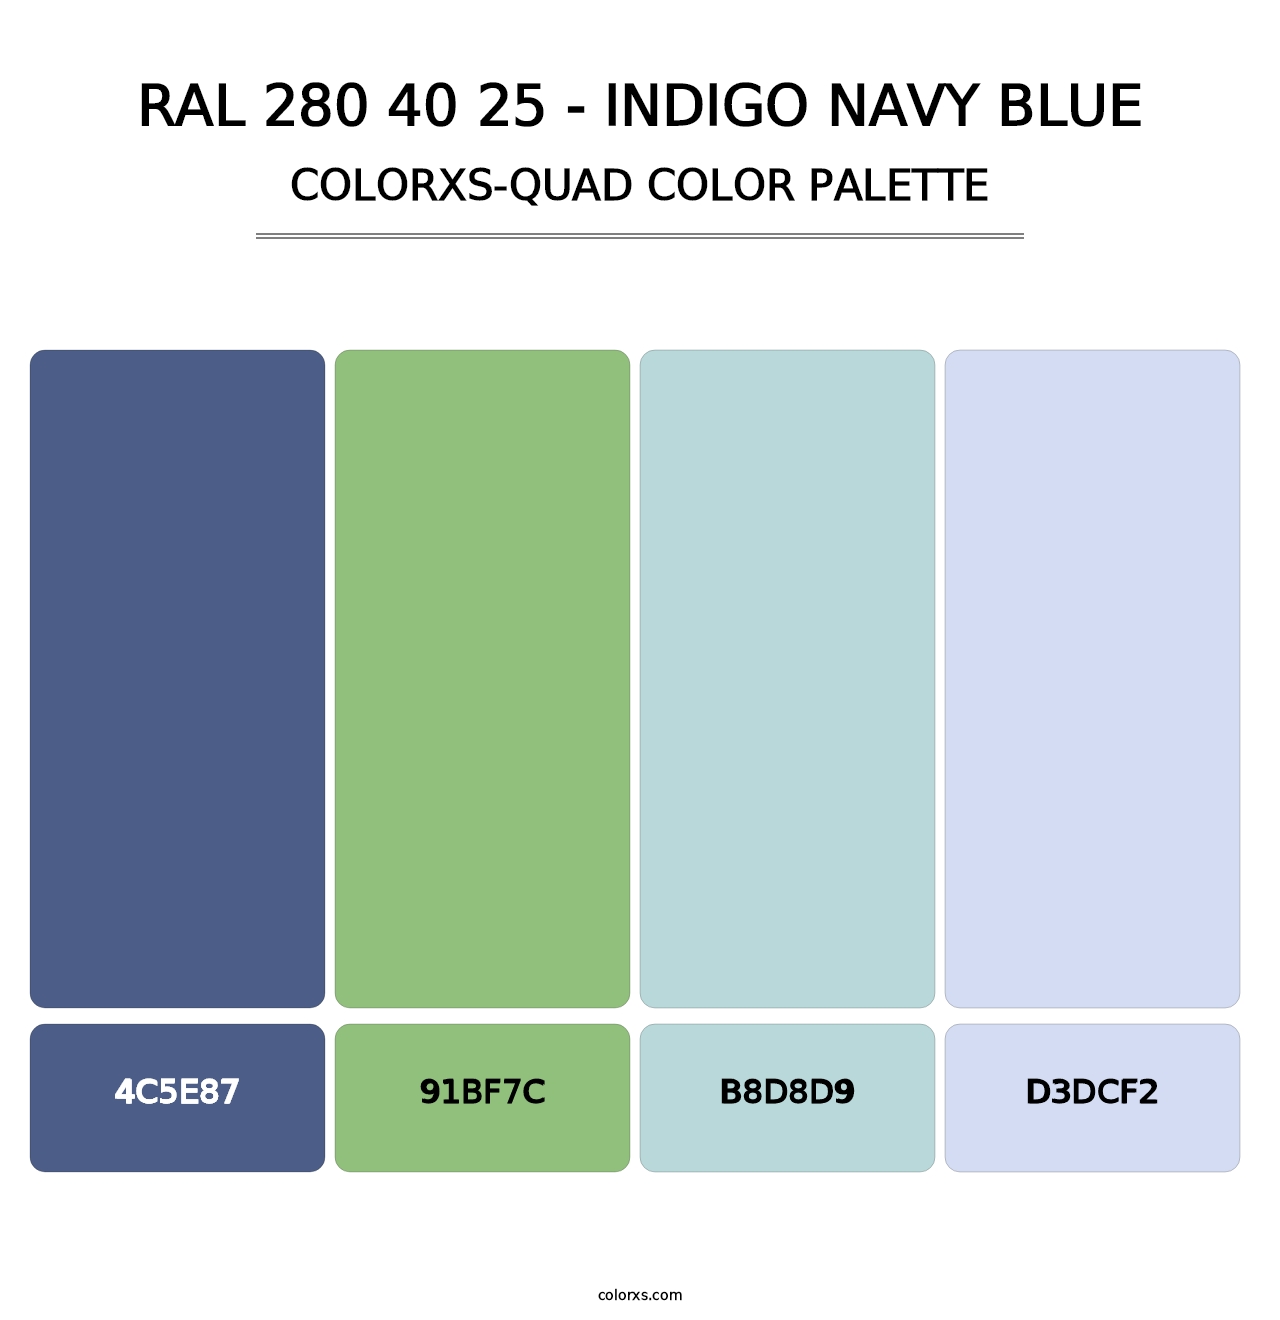 RAL 280 40 25 - Indigo Navy Blue - Colorxs Quad Palette